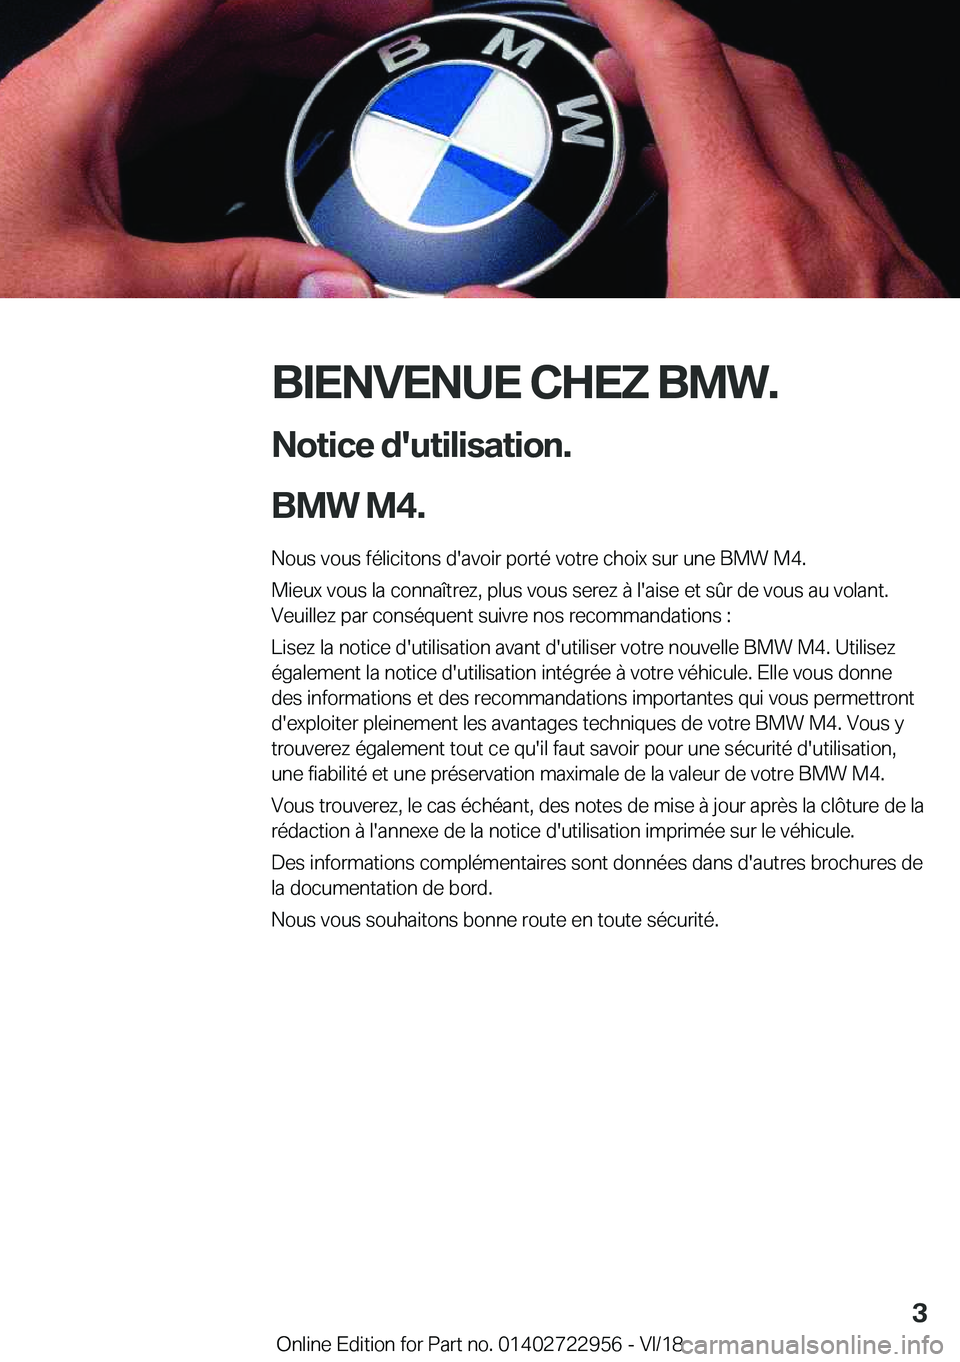 BMW M4 2019  Notices Demploi (in French) �B�I�E�N�V�E�N�U�E��C�H�E�;��B�M�W�.�N�o�t�i�c�e��d�'�u�t�i�l�i�s�a�t�i�o�n�.
�B�M�W��M�4�. �N�o�u�s��v�o�u�s��f�é�l�i�c�i�t�o�n�s��d�'�a�v�o�i�r��p�o�r�t�é��v�o�t�r�e��c�h�o�i�x�